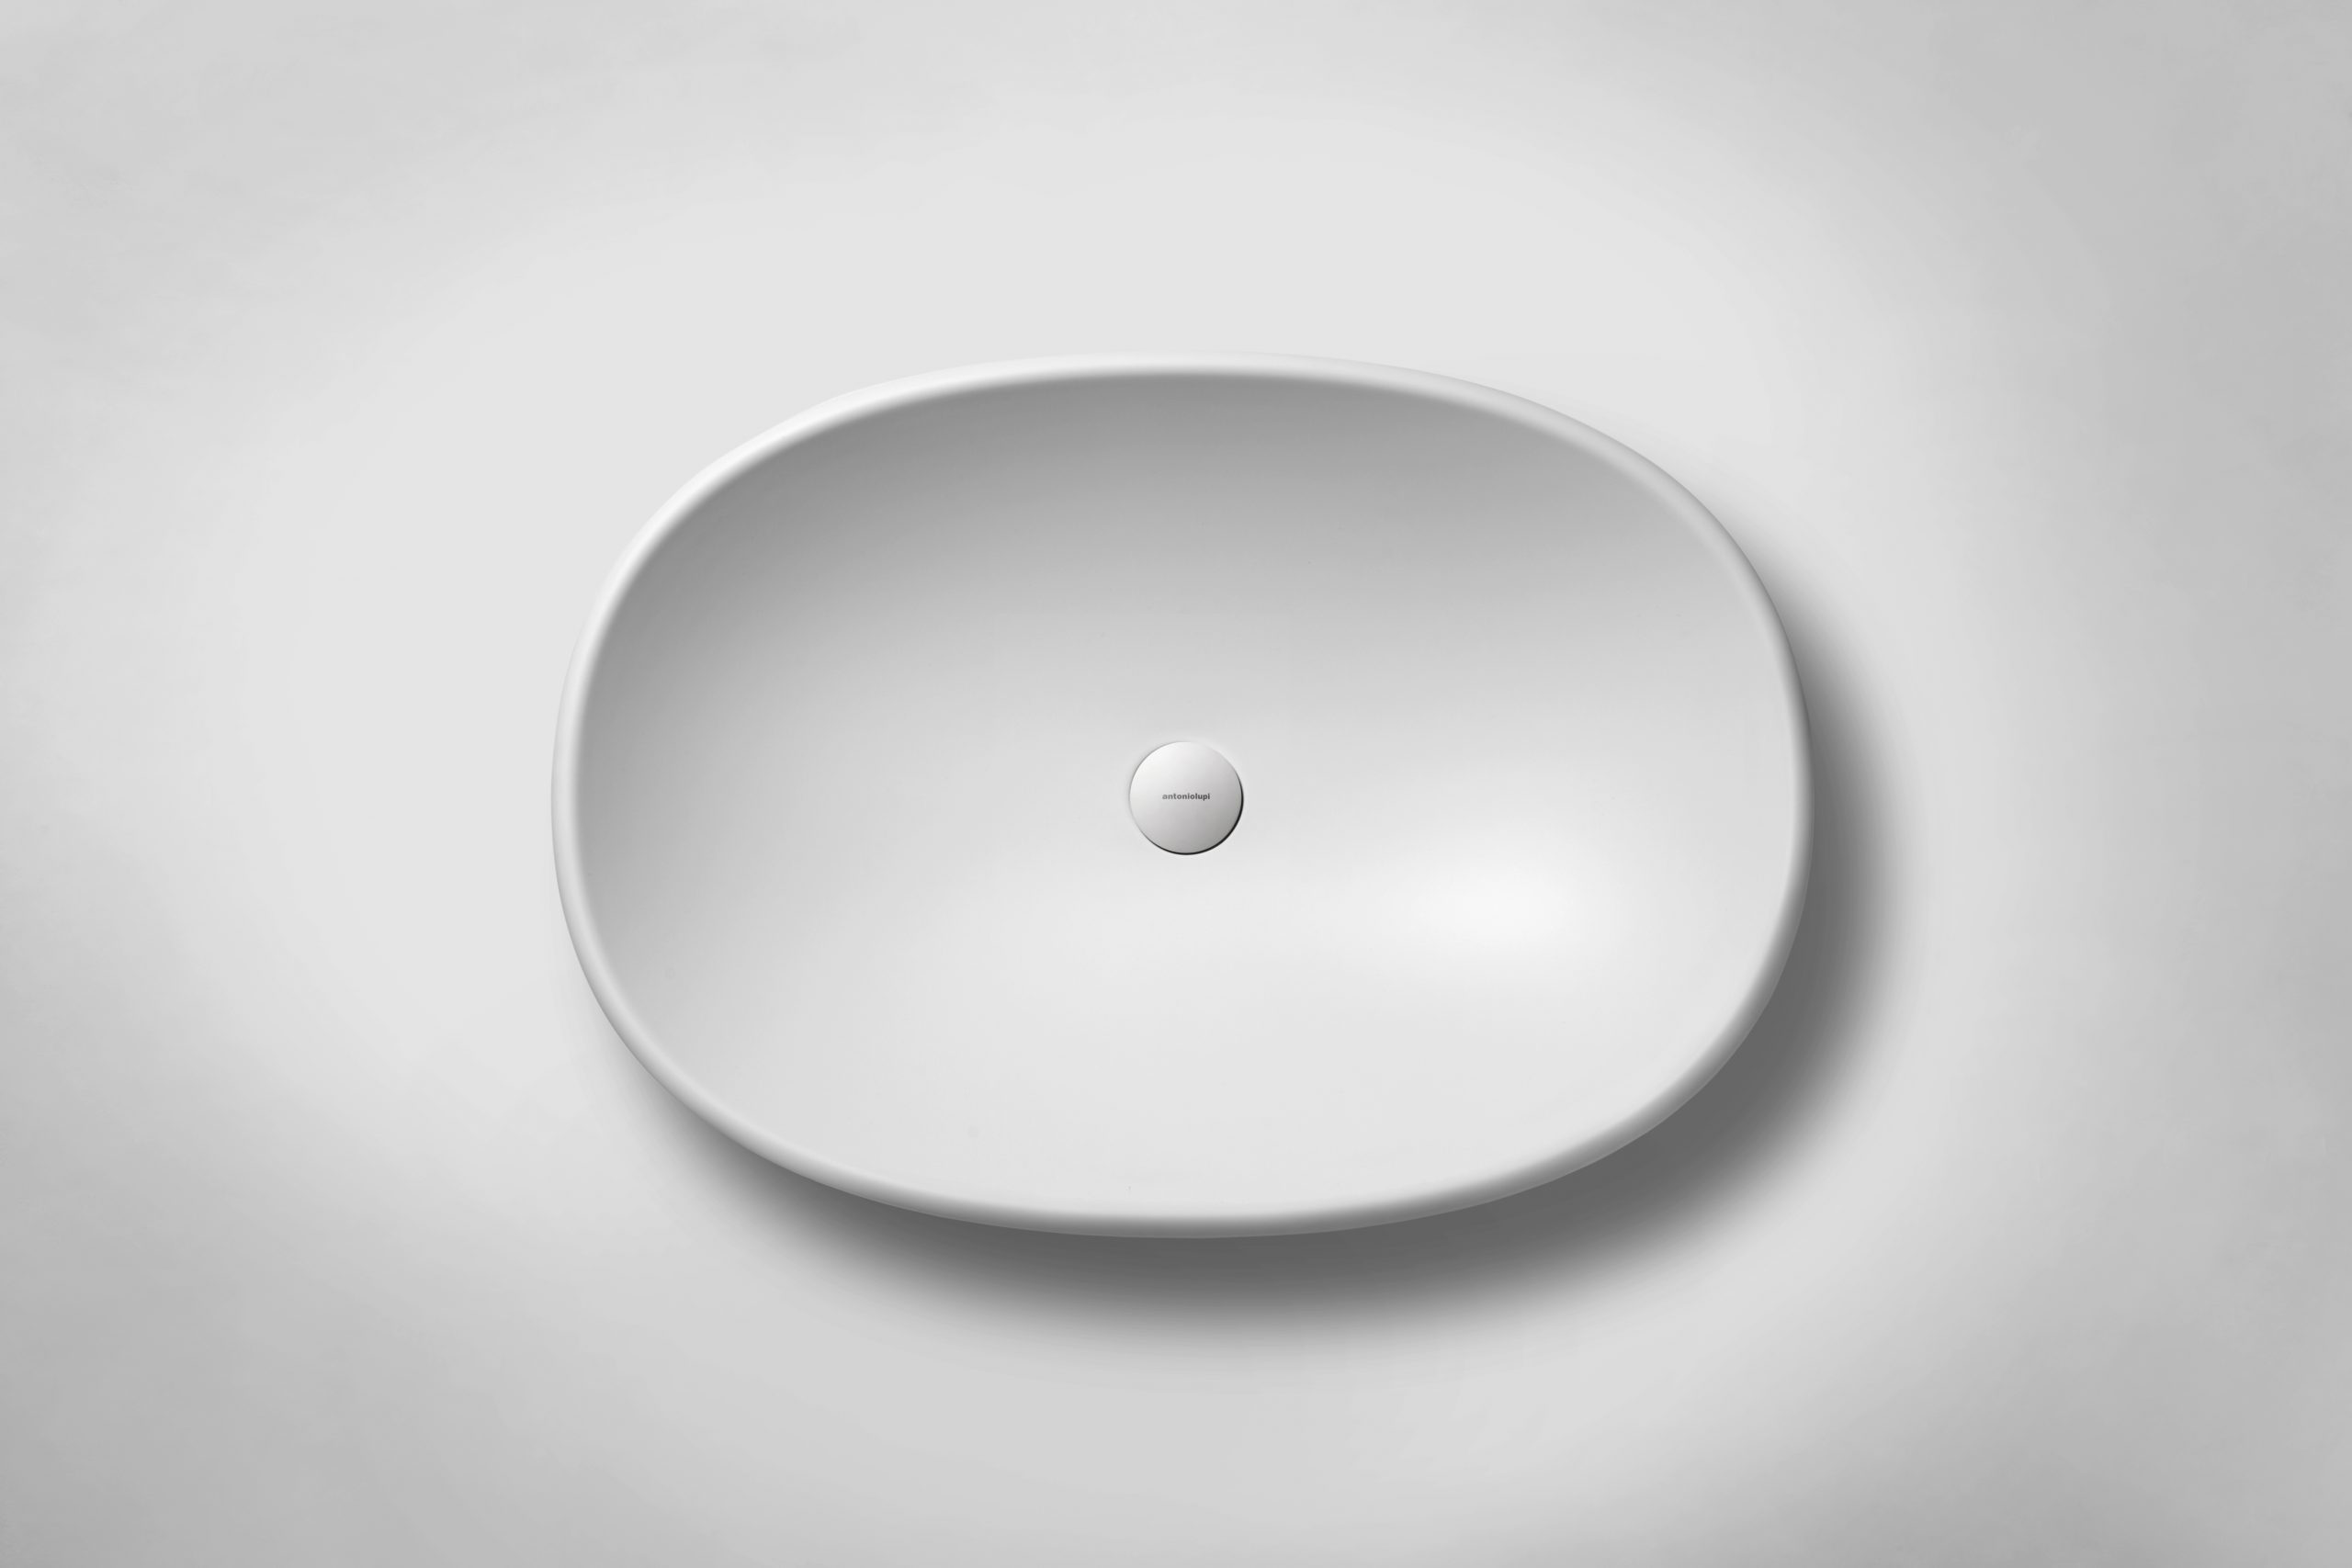 Oval Rim washbowl designed by Debiasi Sandri for Antoniolupi